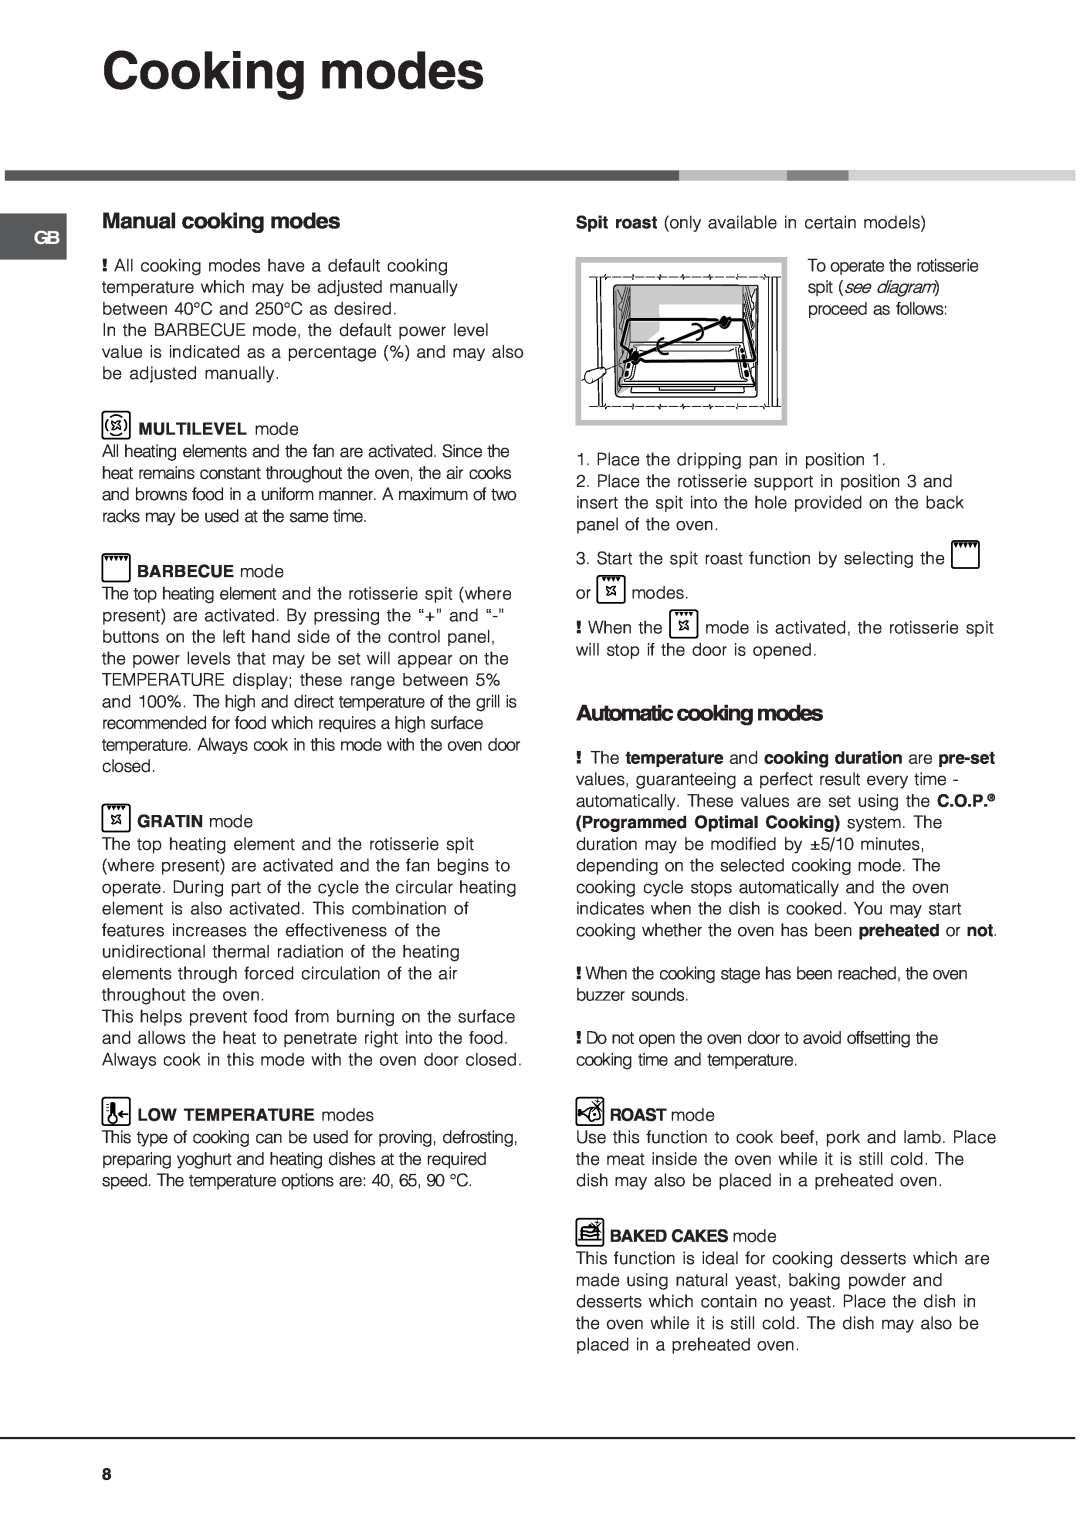 Hotpoint SE48101PGX manual Cooking modes, Manual cooking modes, Automatic cooking modes 